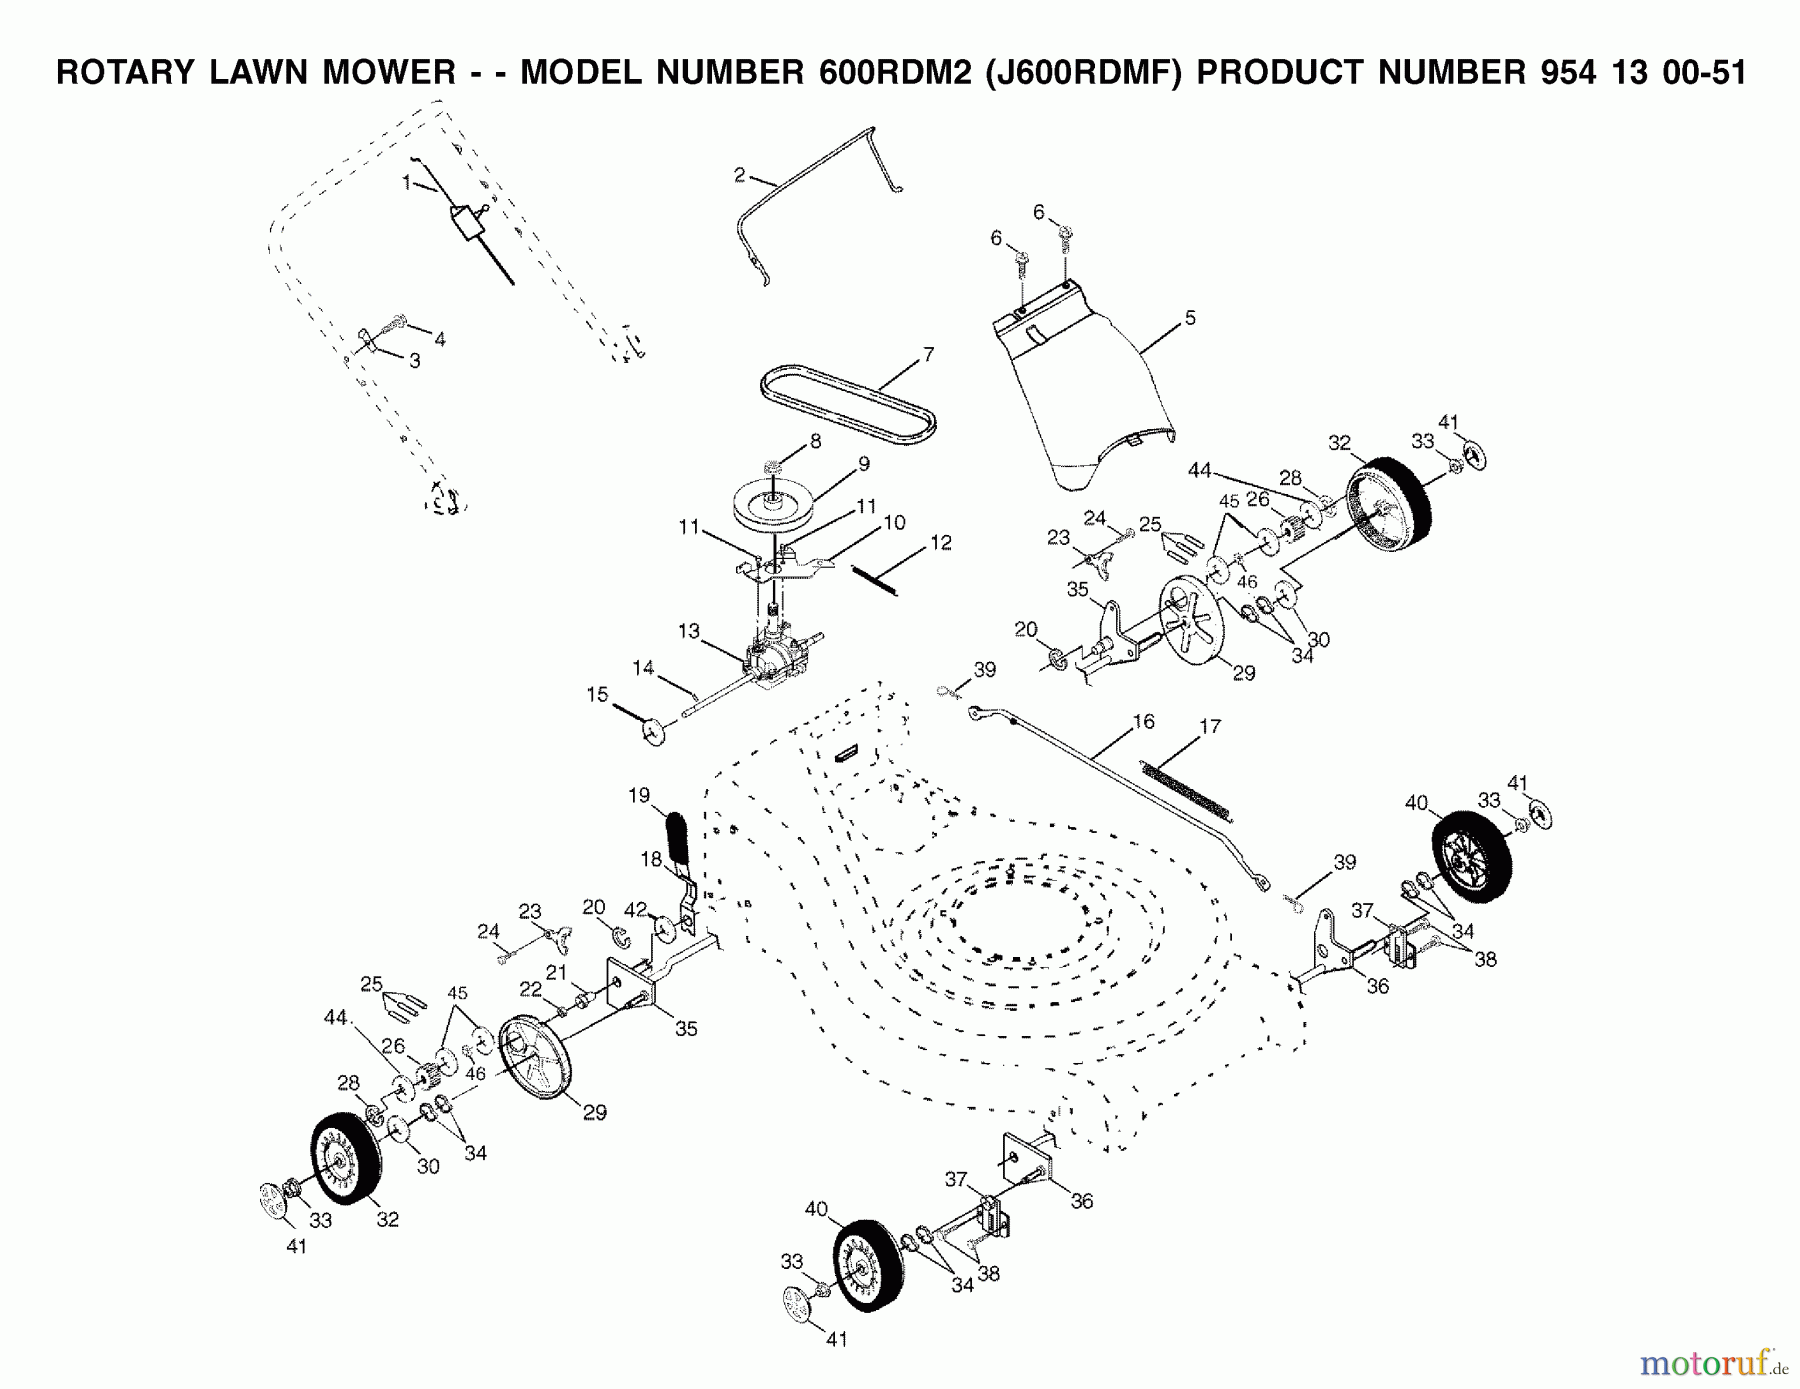  Jonsered Rasenmäher 600RDM2 (J600RDMF, 954130051) - Jonsered Walk-Behind Mower (2002-02) PRODUCT COMPLETE #1